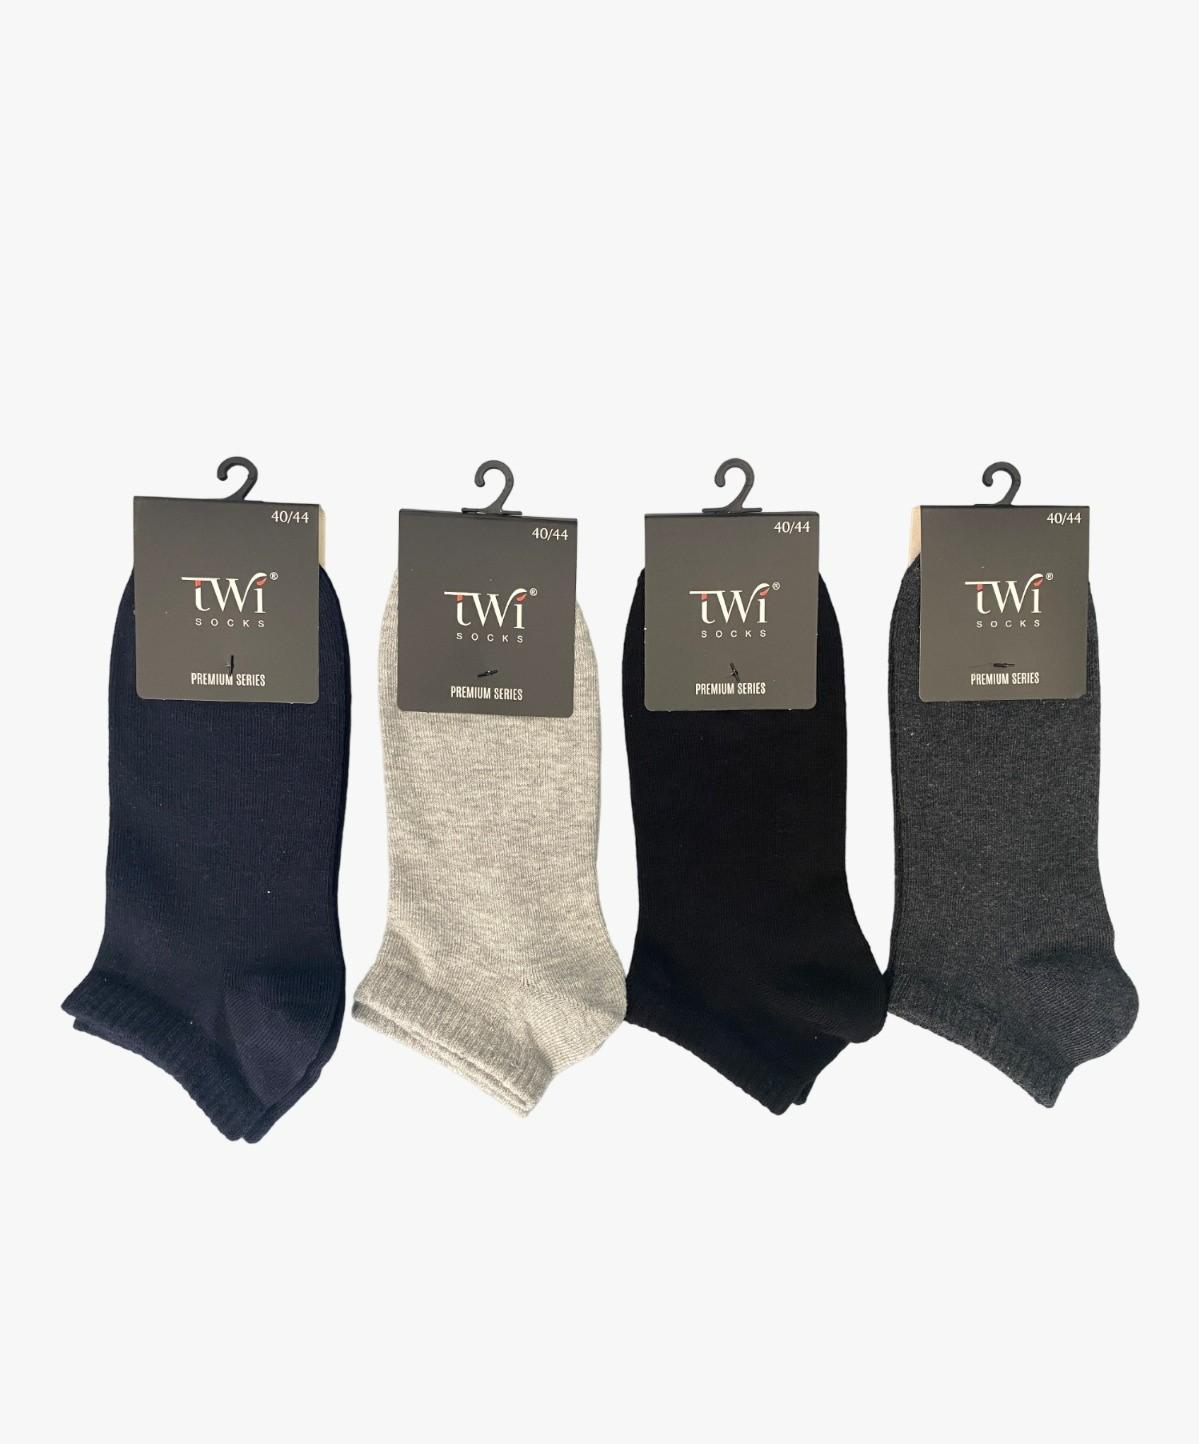 Selected image for TWISOCKS Muške čarape 2100 4/1